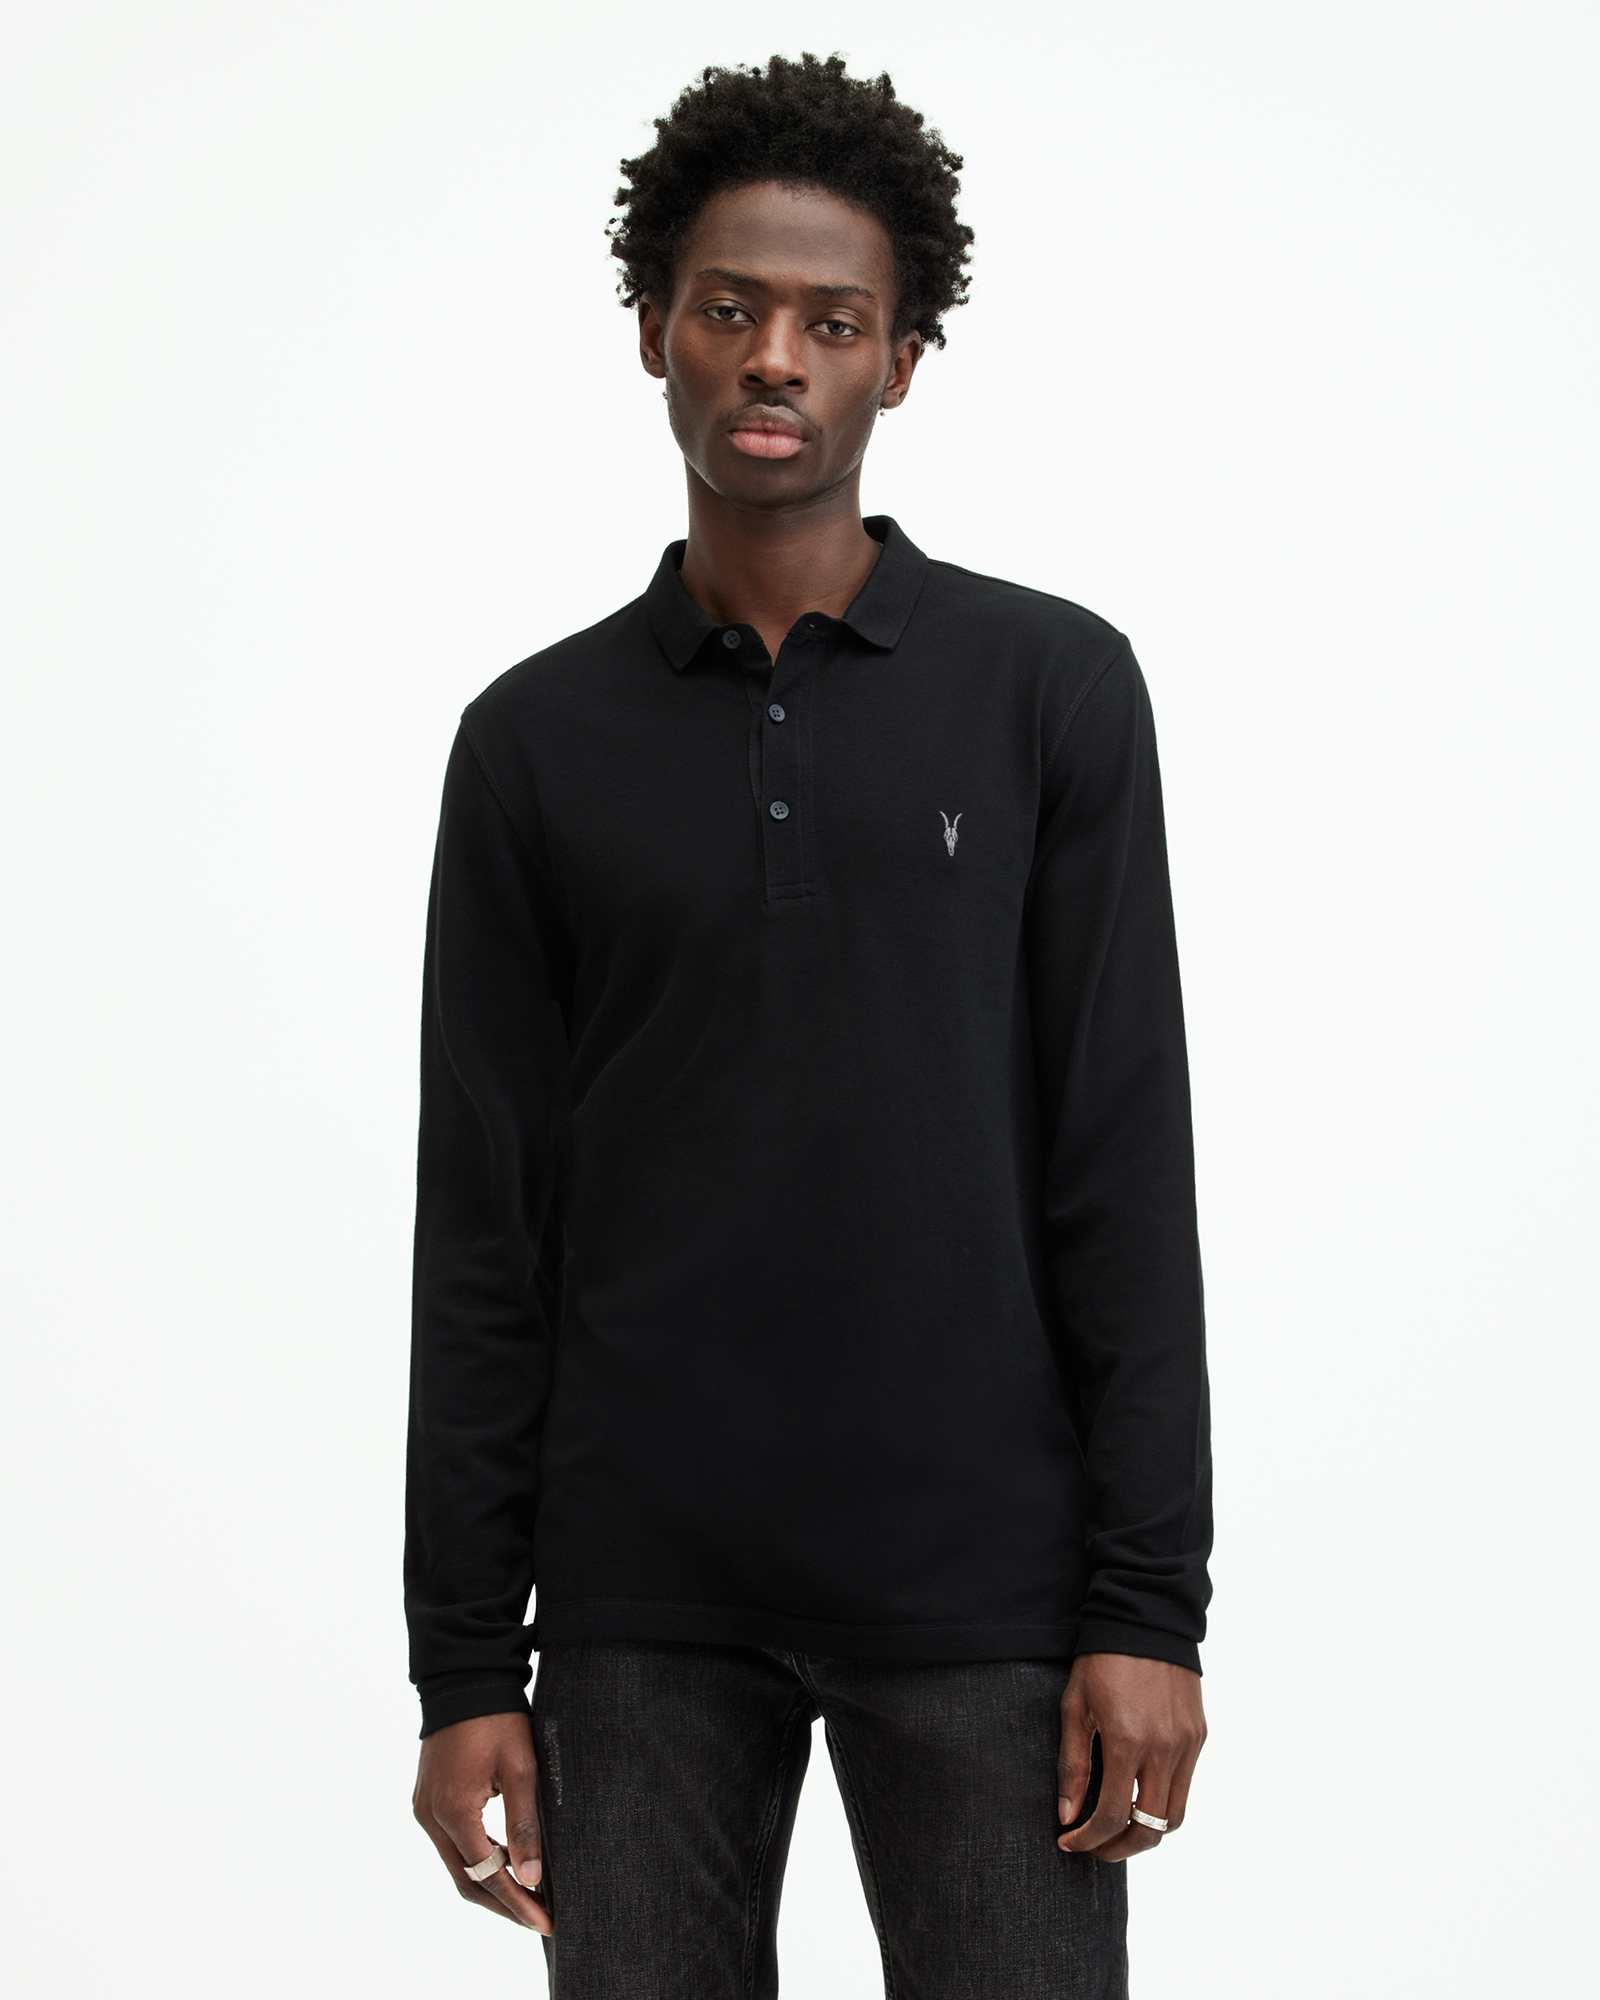 AllSaints Men's Cotton Reform Long Sleeve Polo Shirt, Black, Size: XL